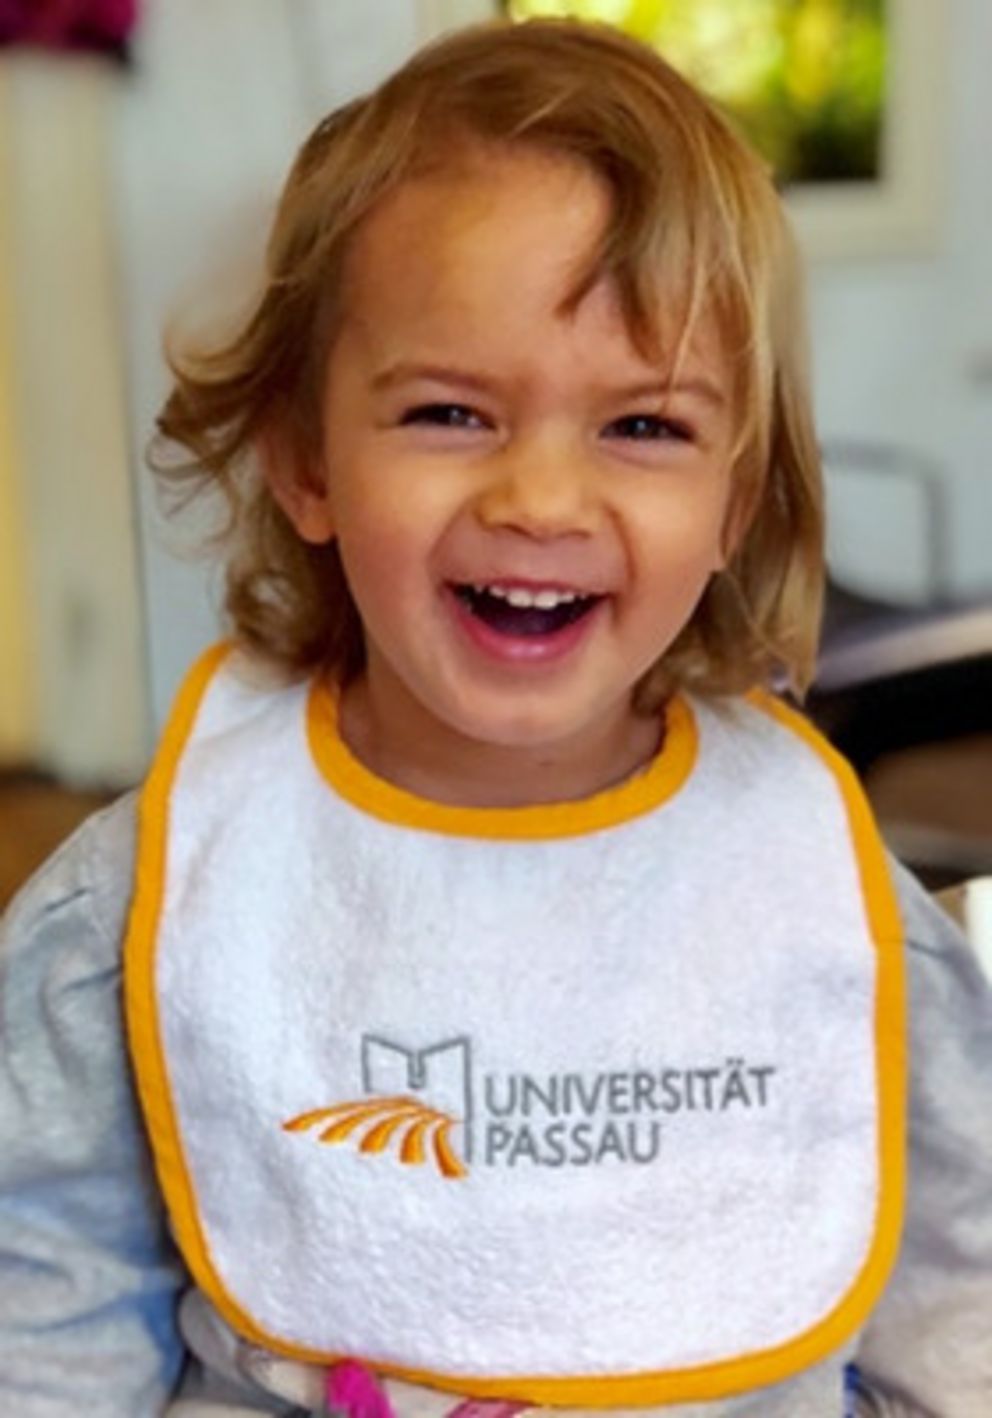 Child with University of Passau logo bib